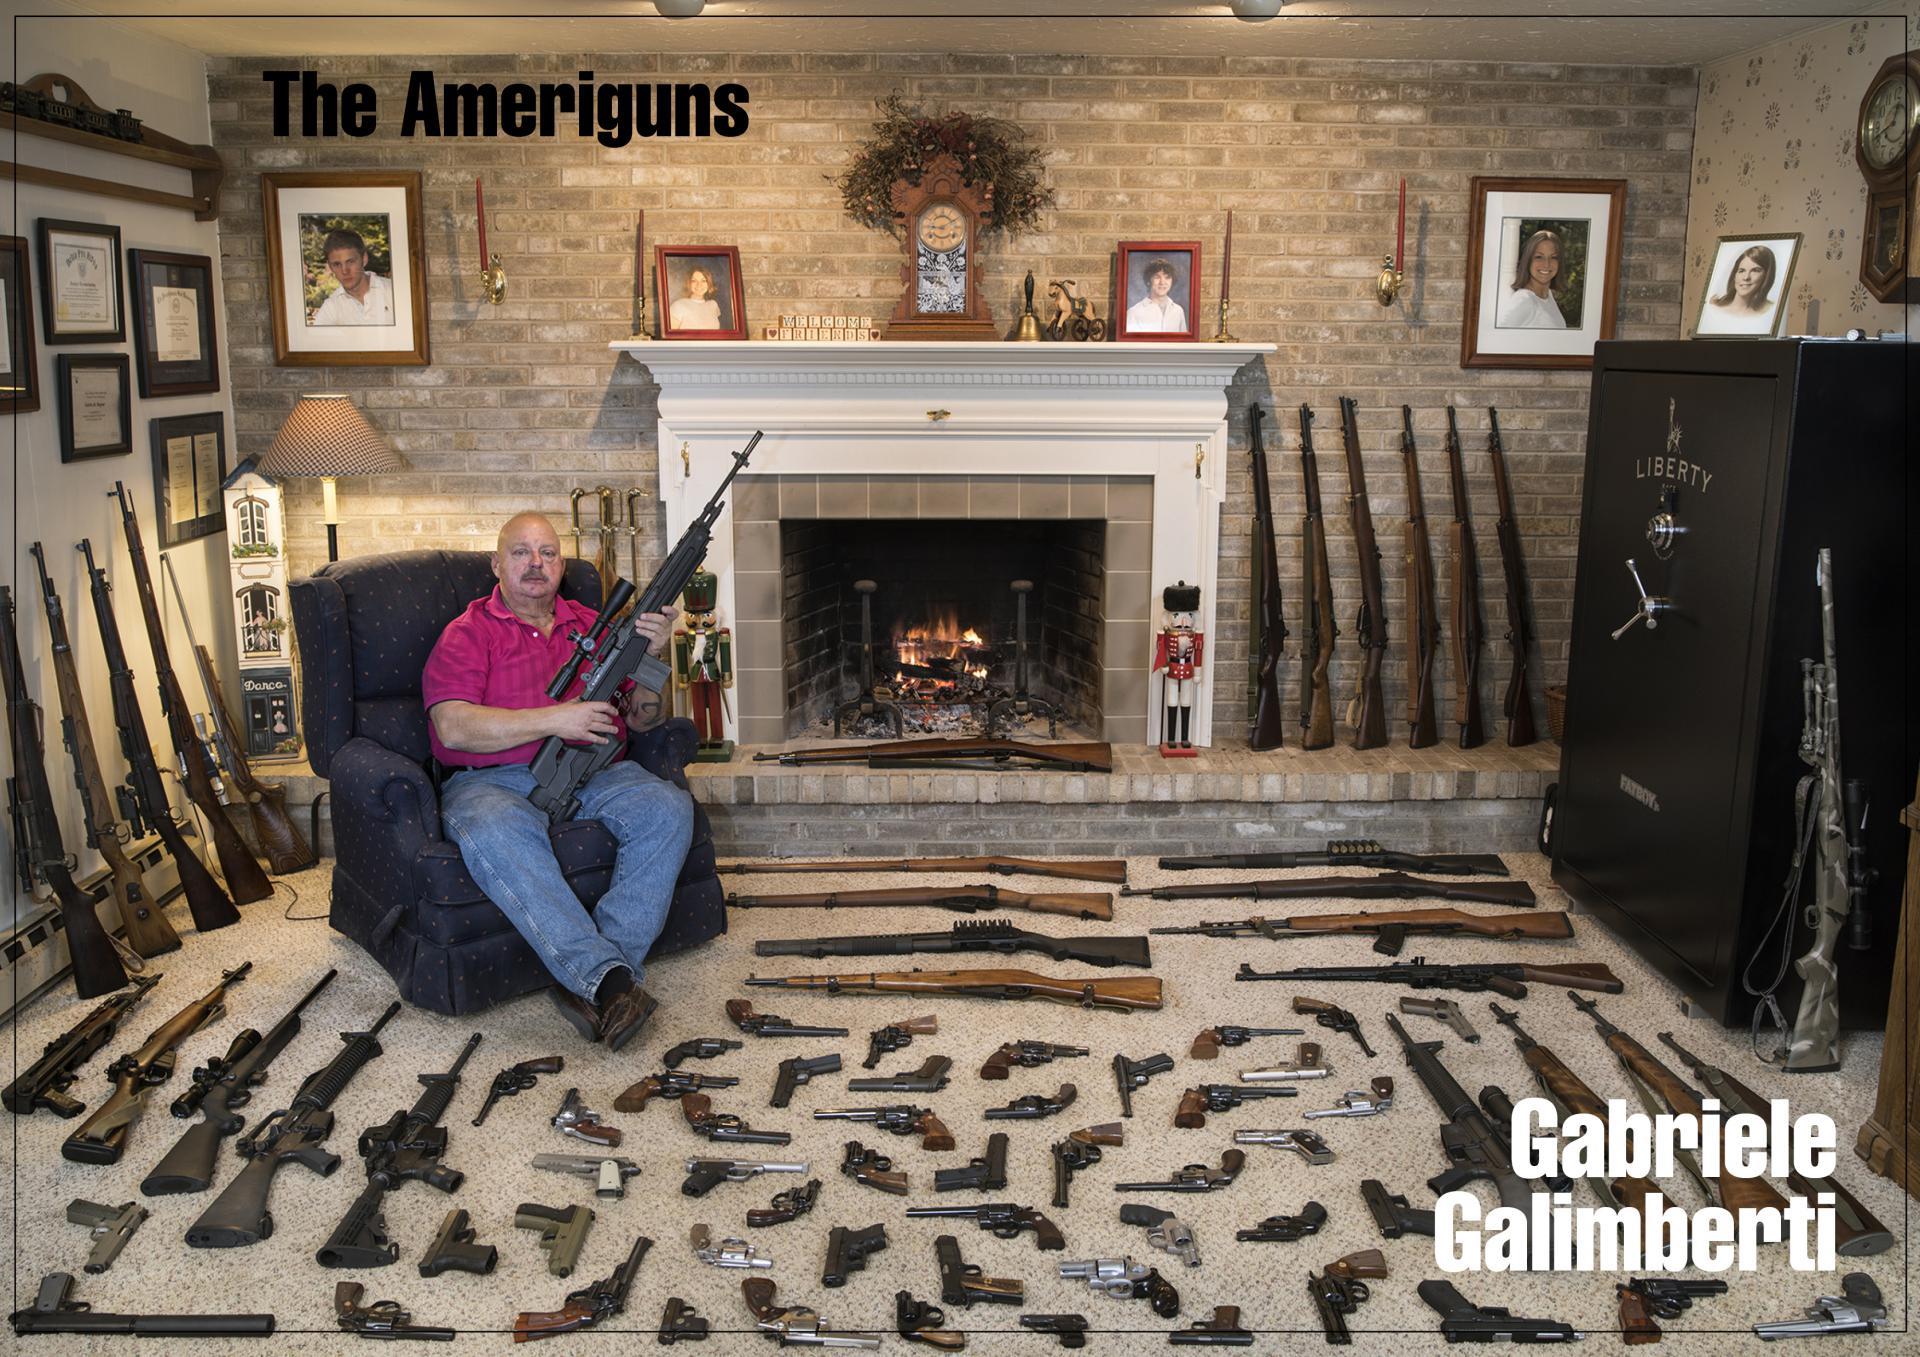 The Ameriguns